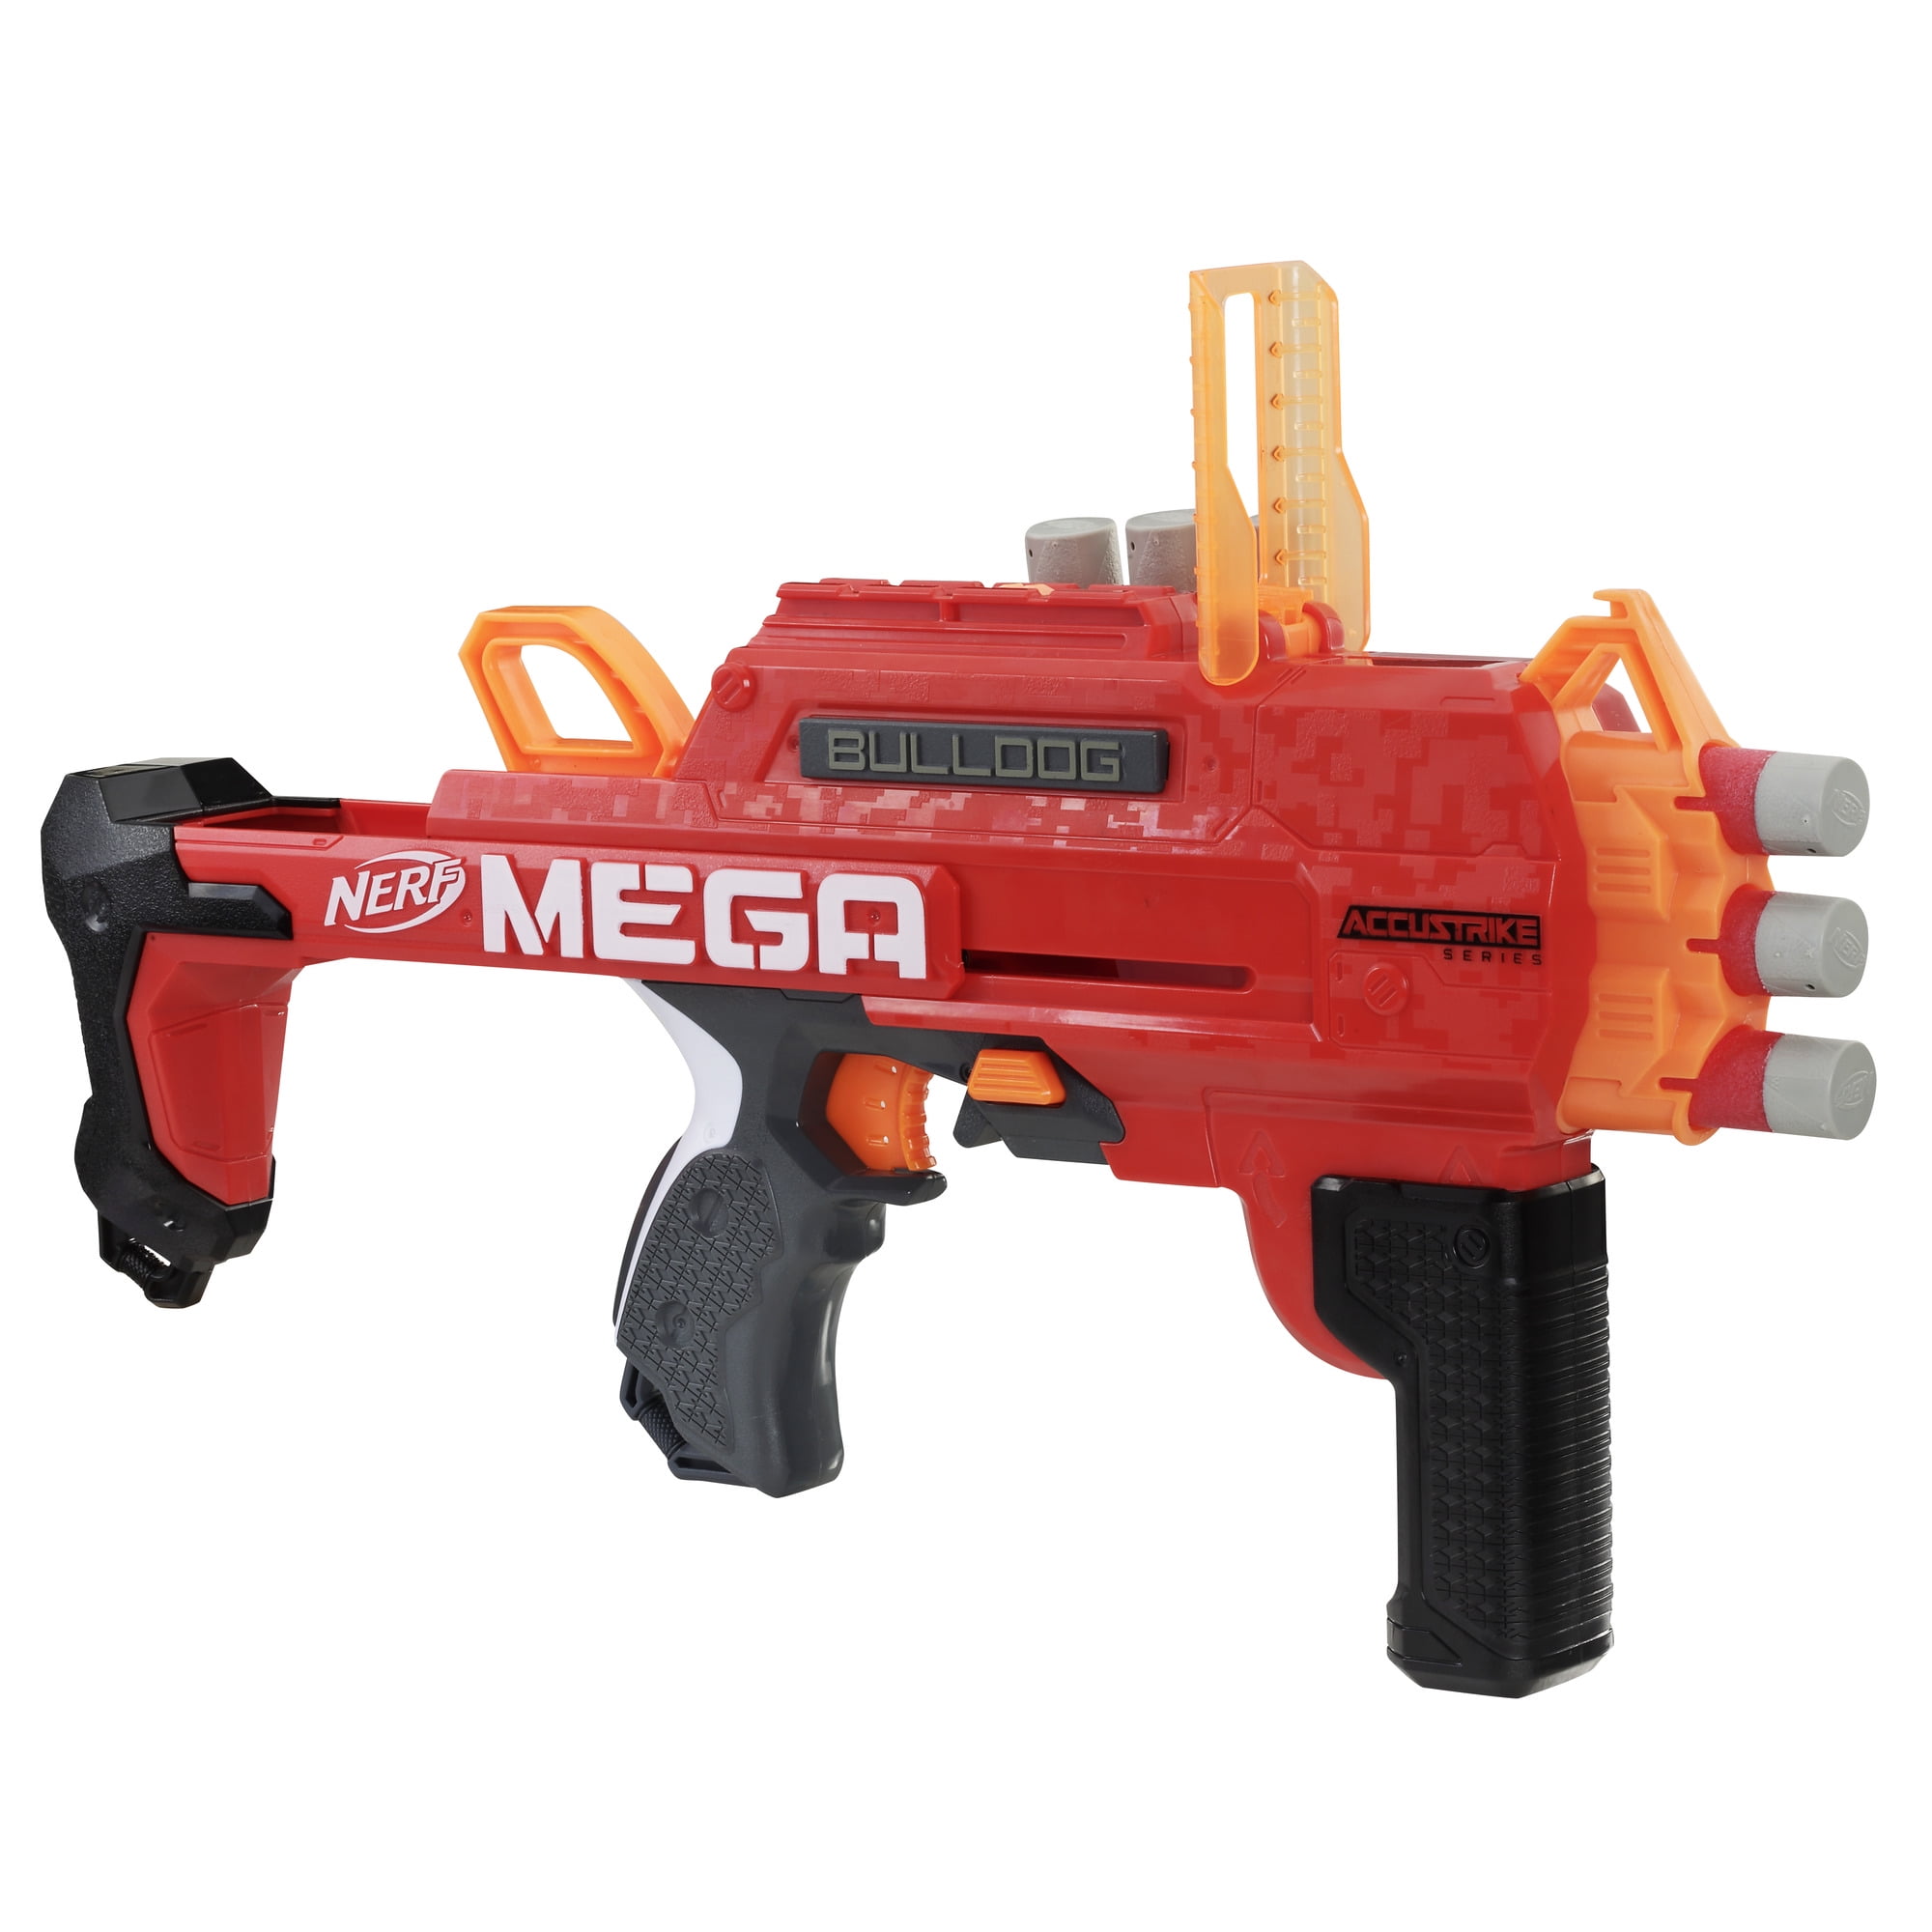 Perplejo Favor Pensativo Nerf AccuStrike Mega Bulldog Blaster, for Ages 8 and up - Walmart.com